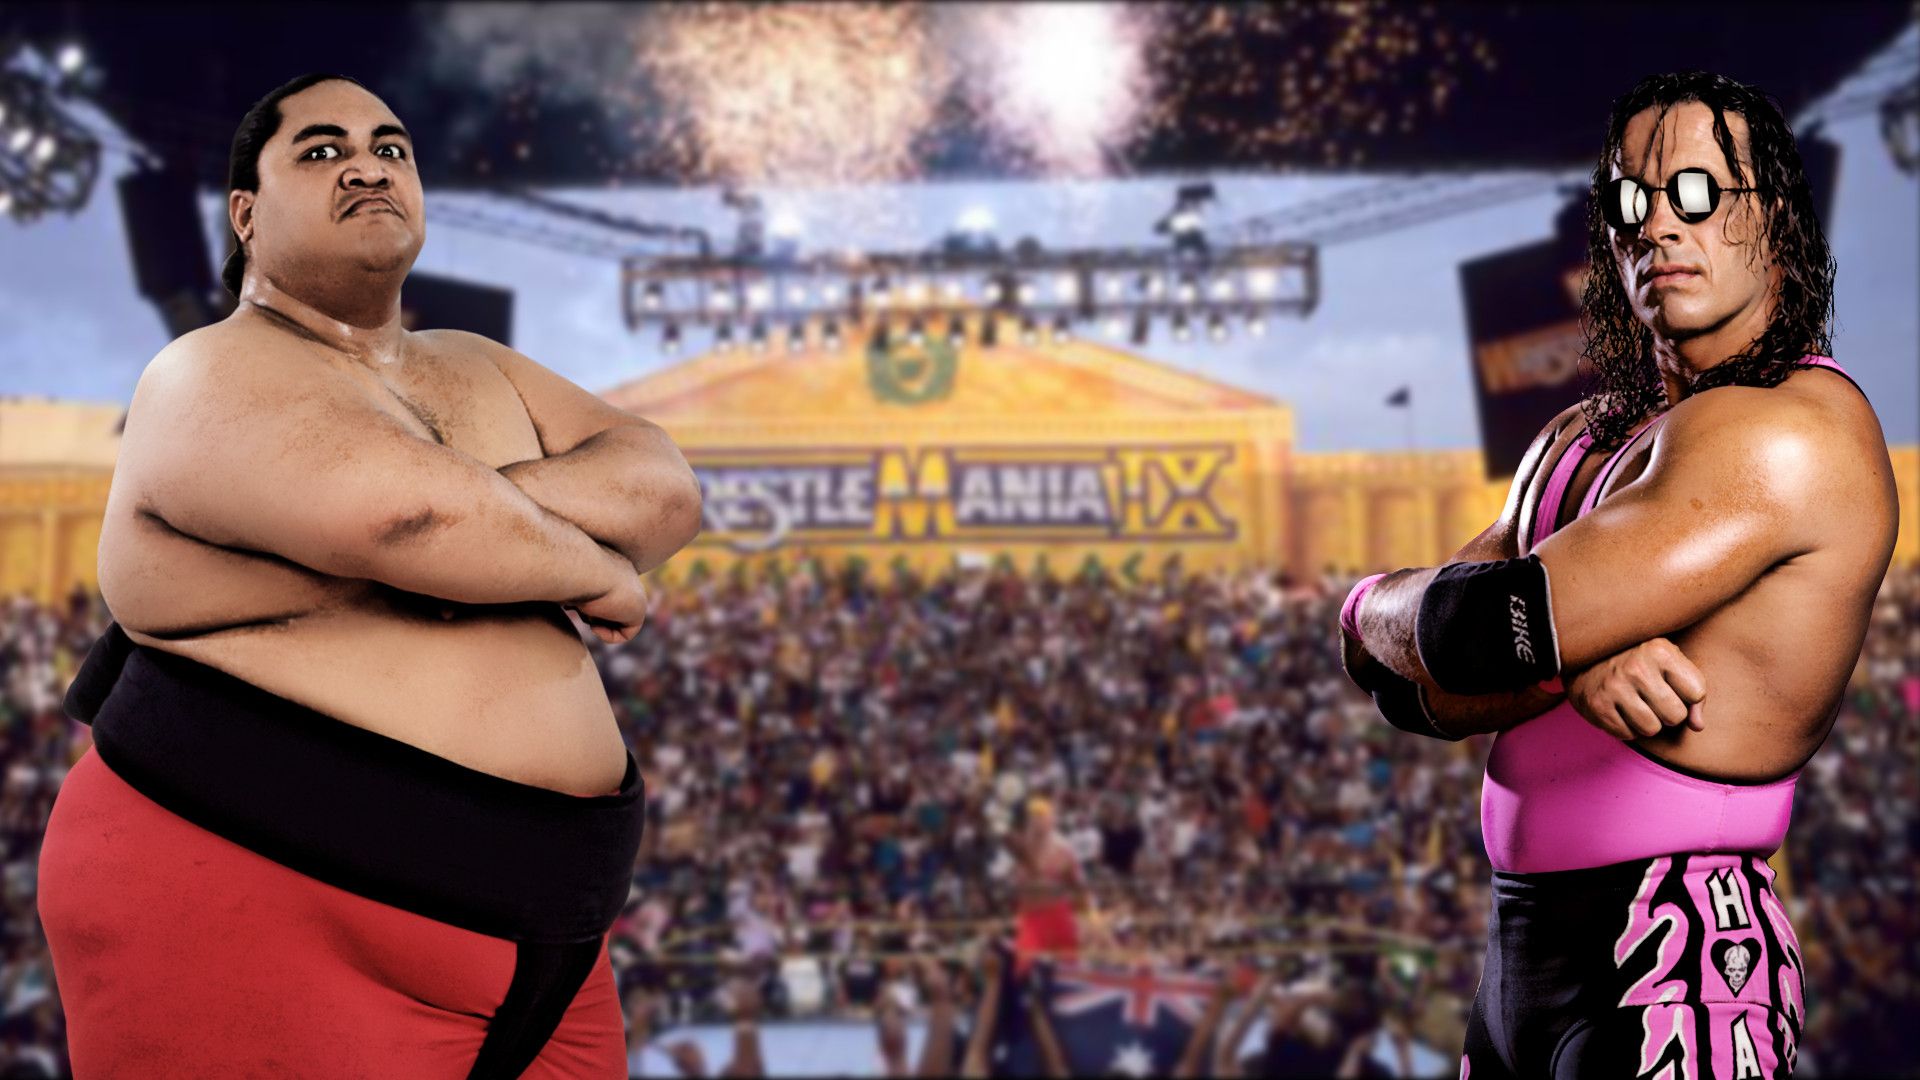 WrestleMania IX background